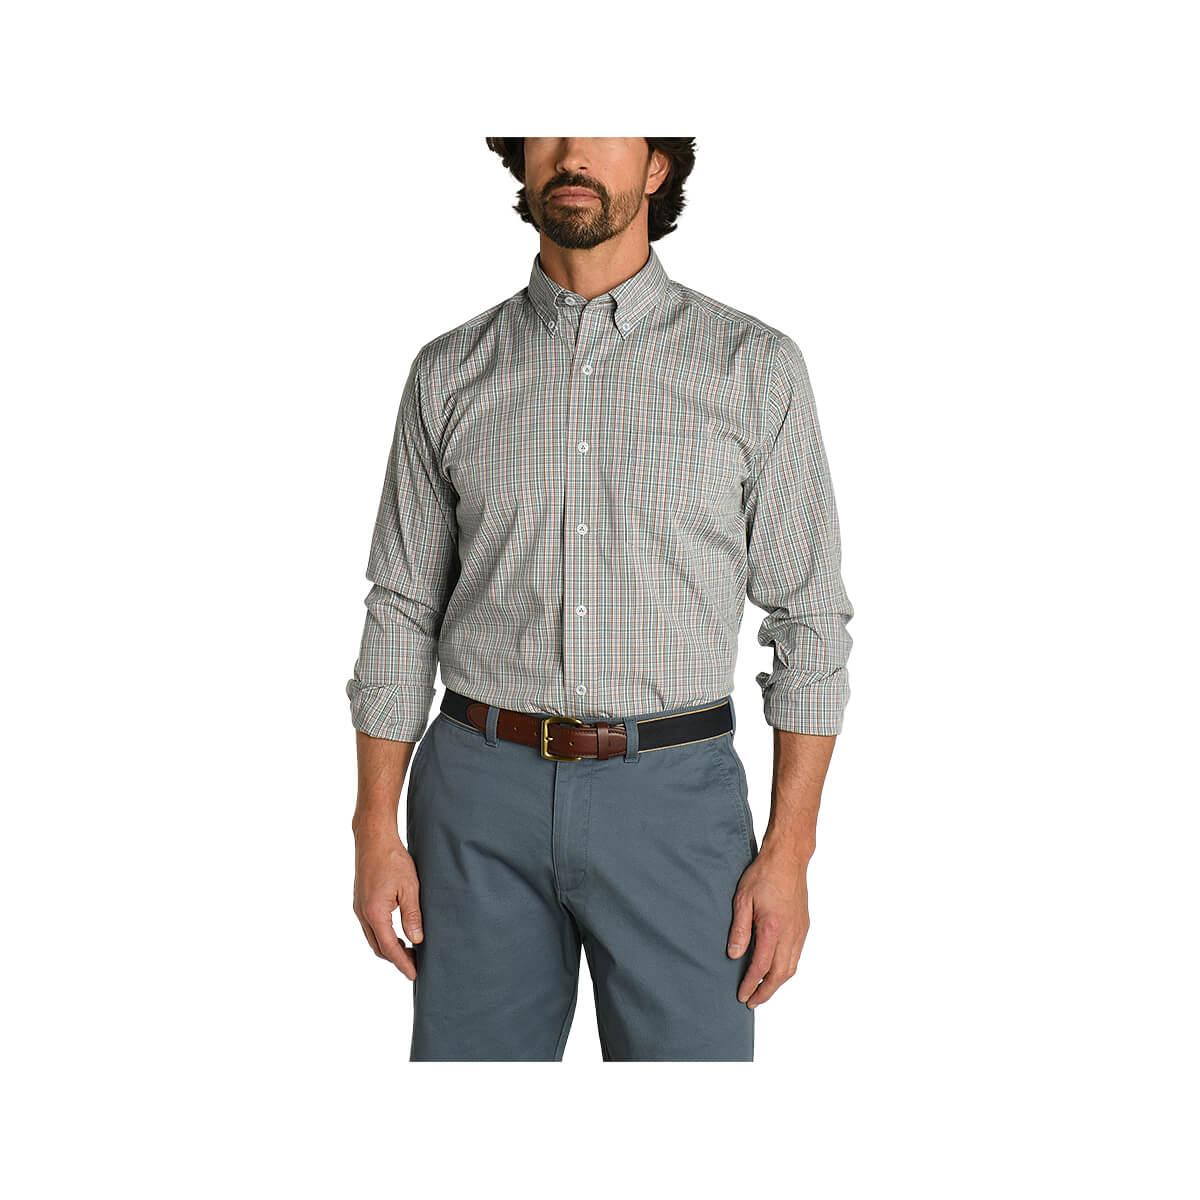  Men's Alton Long Sleeve Performance Plaid Button Up Shirt